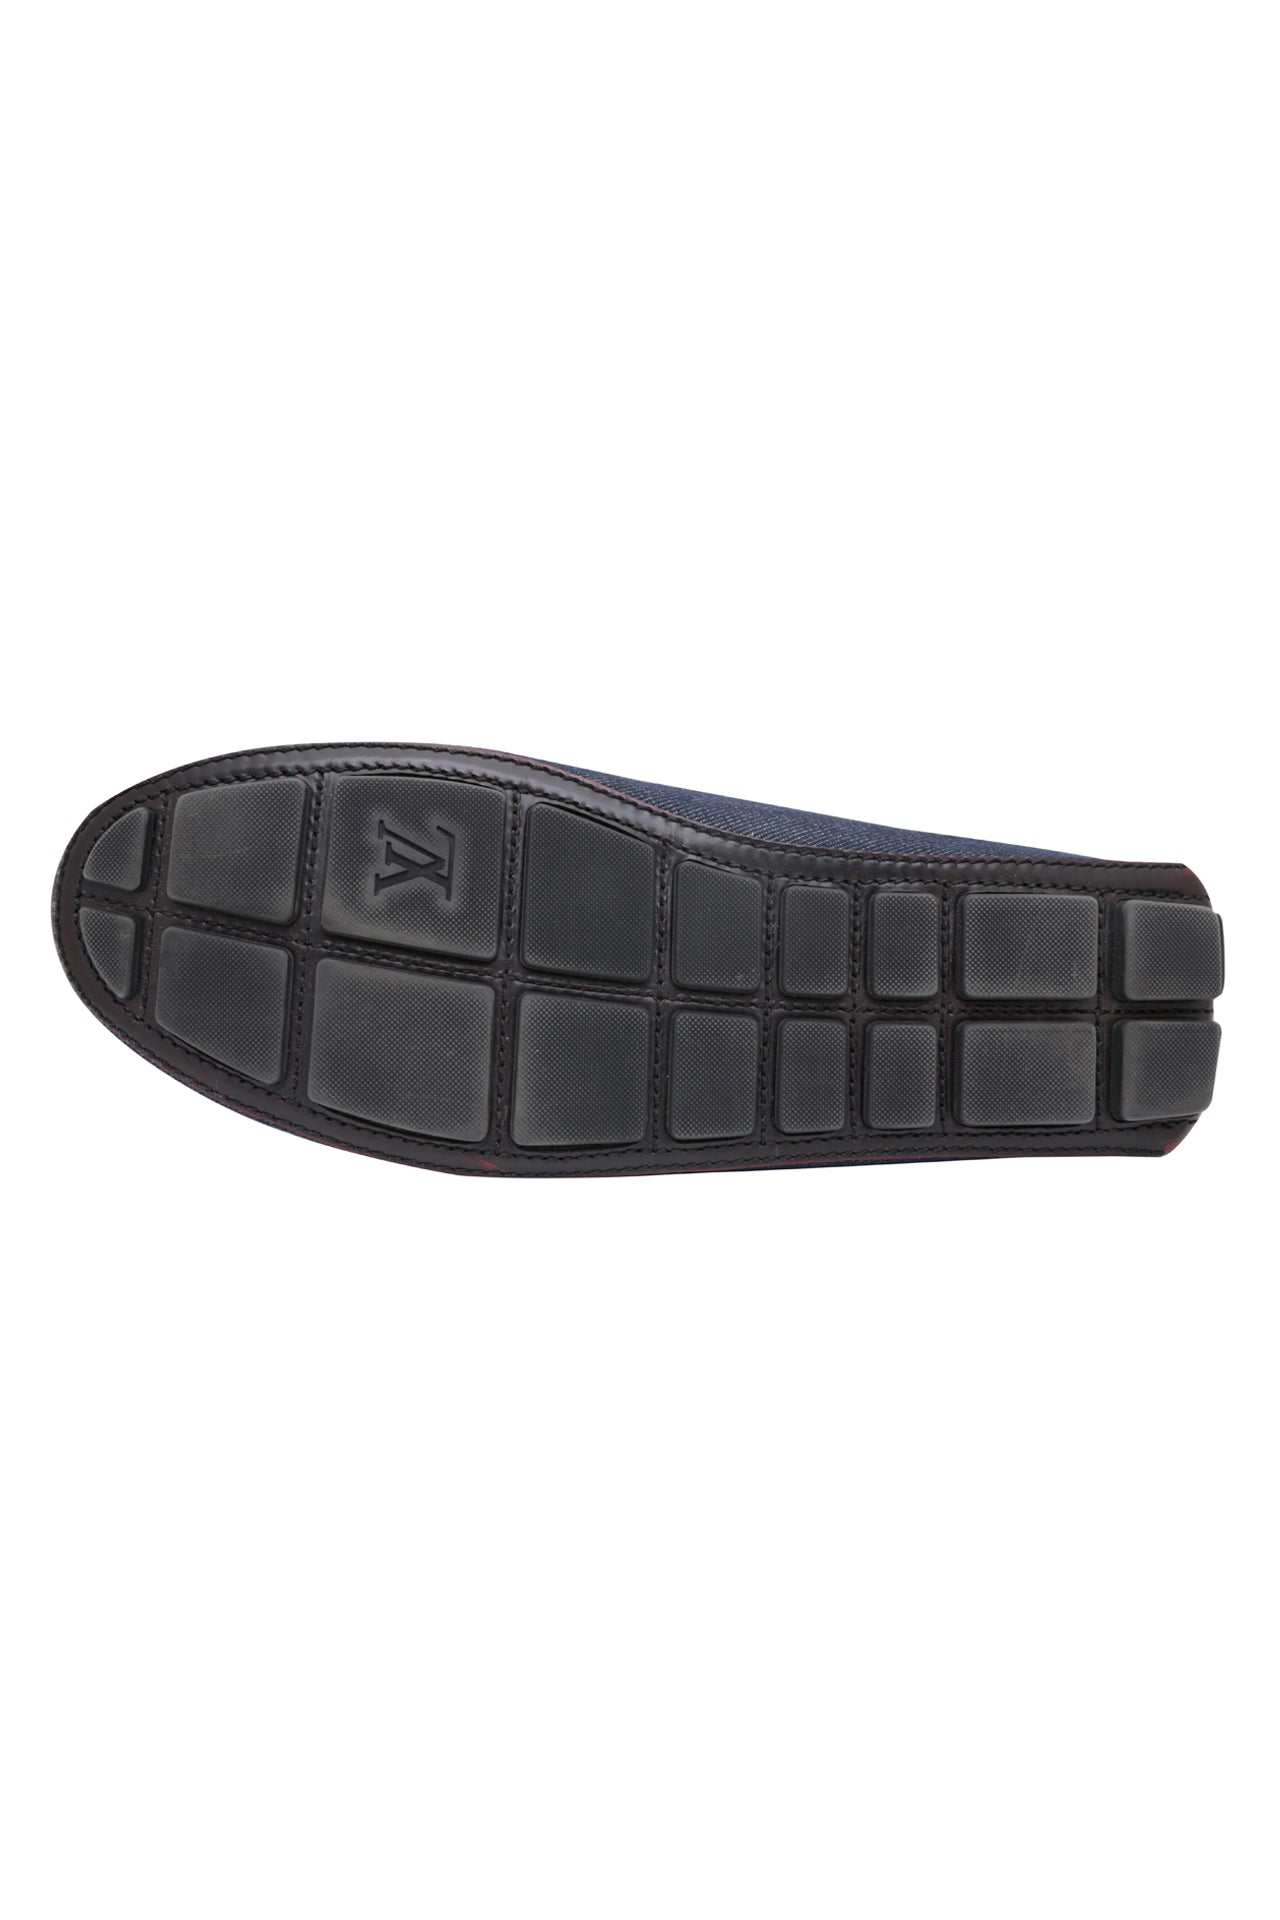 Louis Vuitton Epi Leather Penny Loafers Denim UK 9